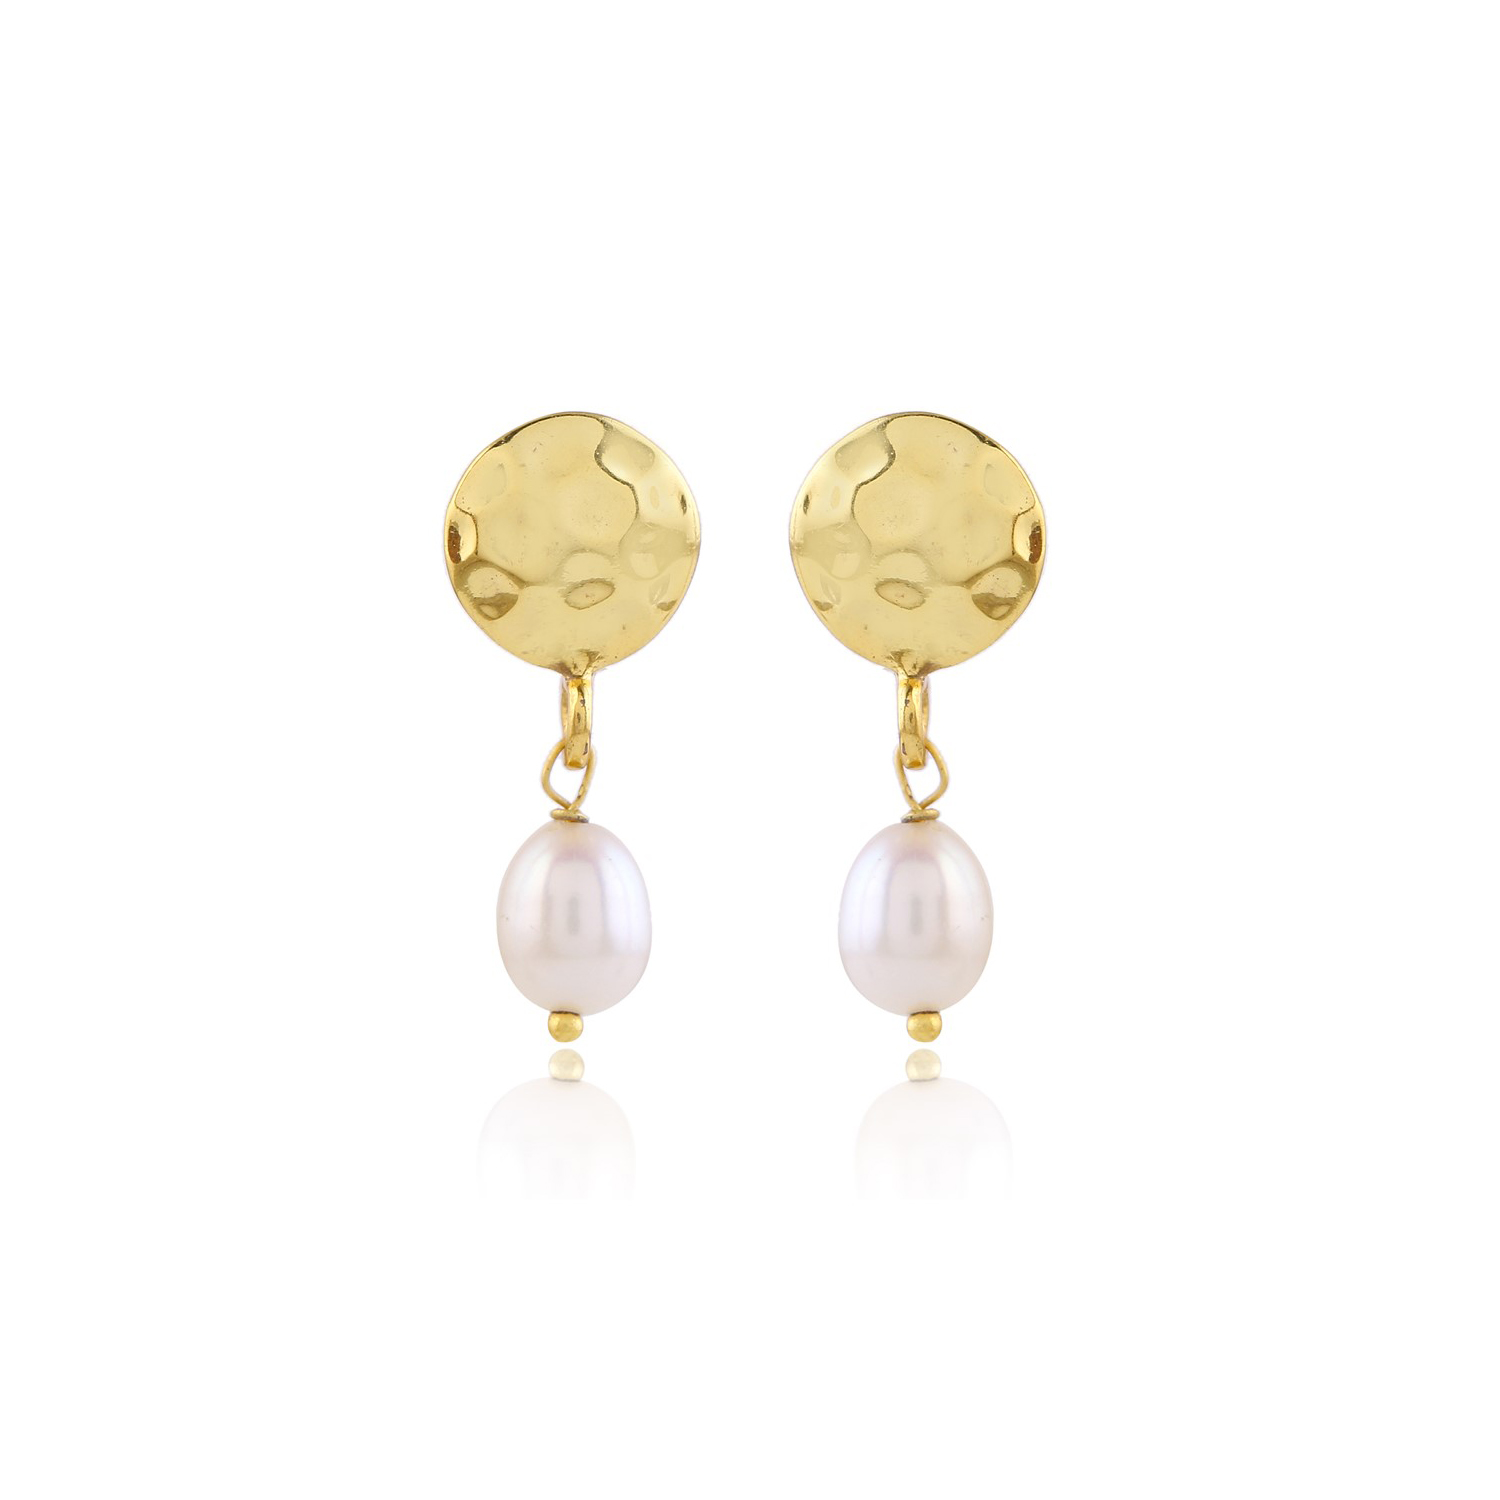 Pearl earrings / white pearl earring